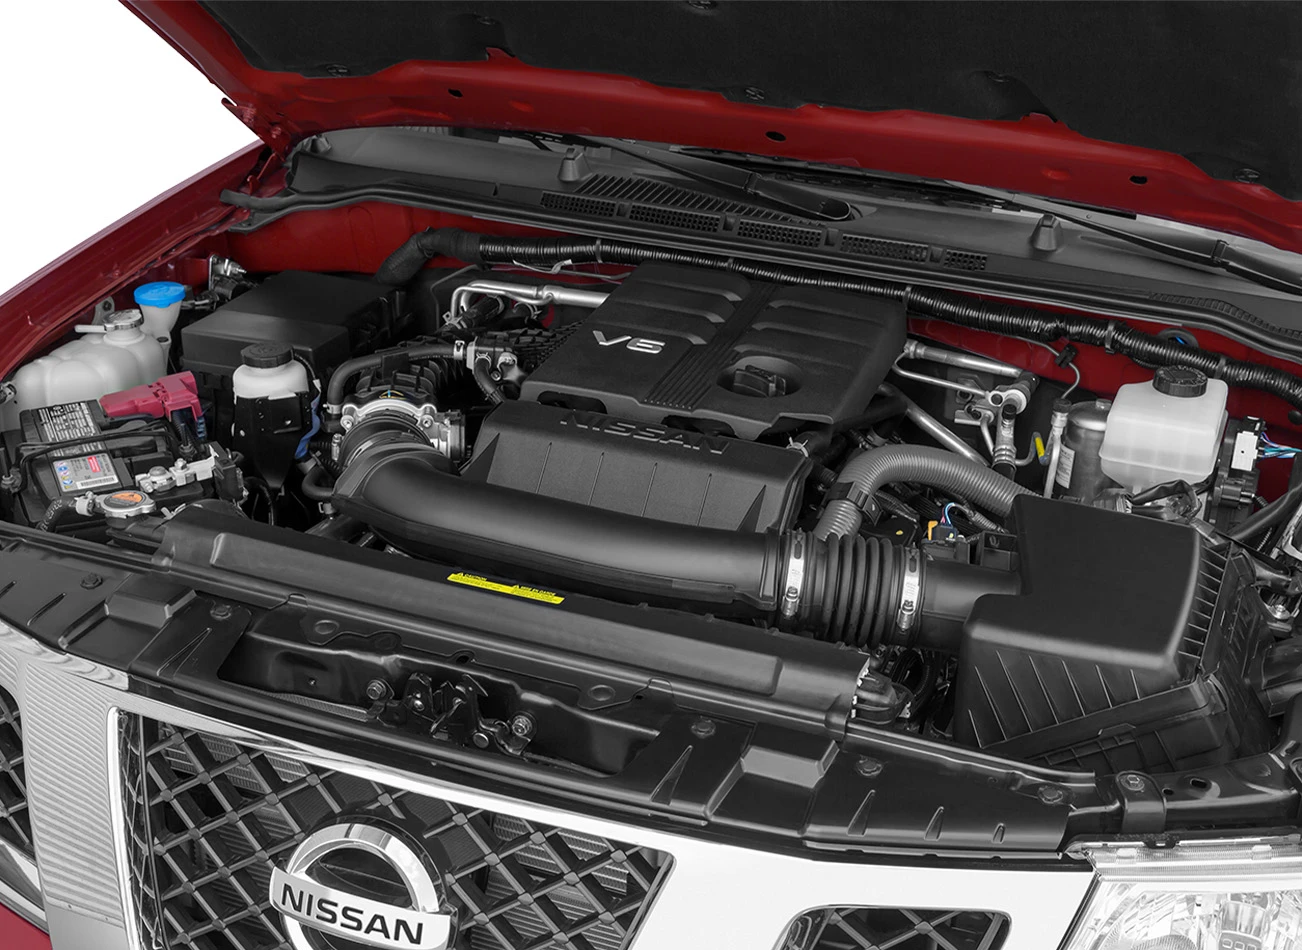  2020 Nissan Frontier: Engine | CarMax